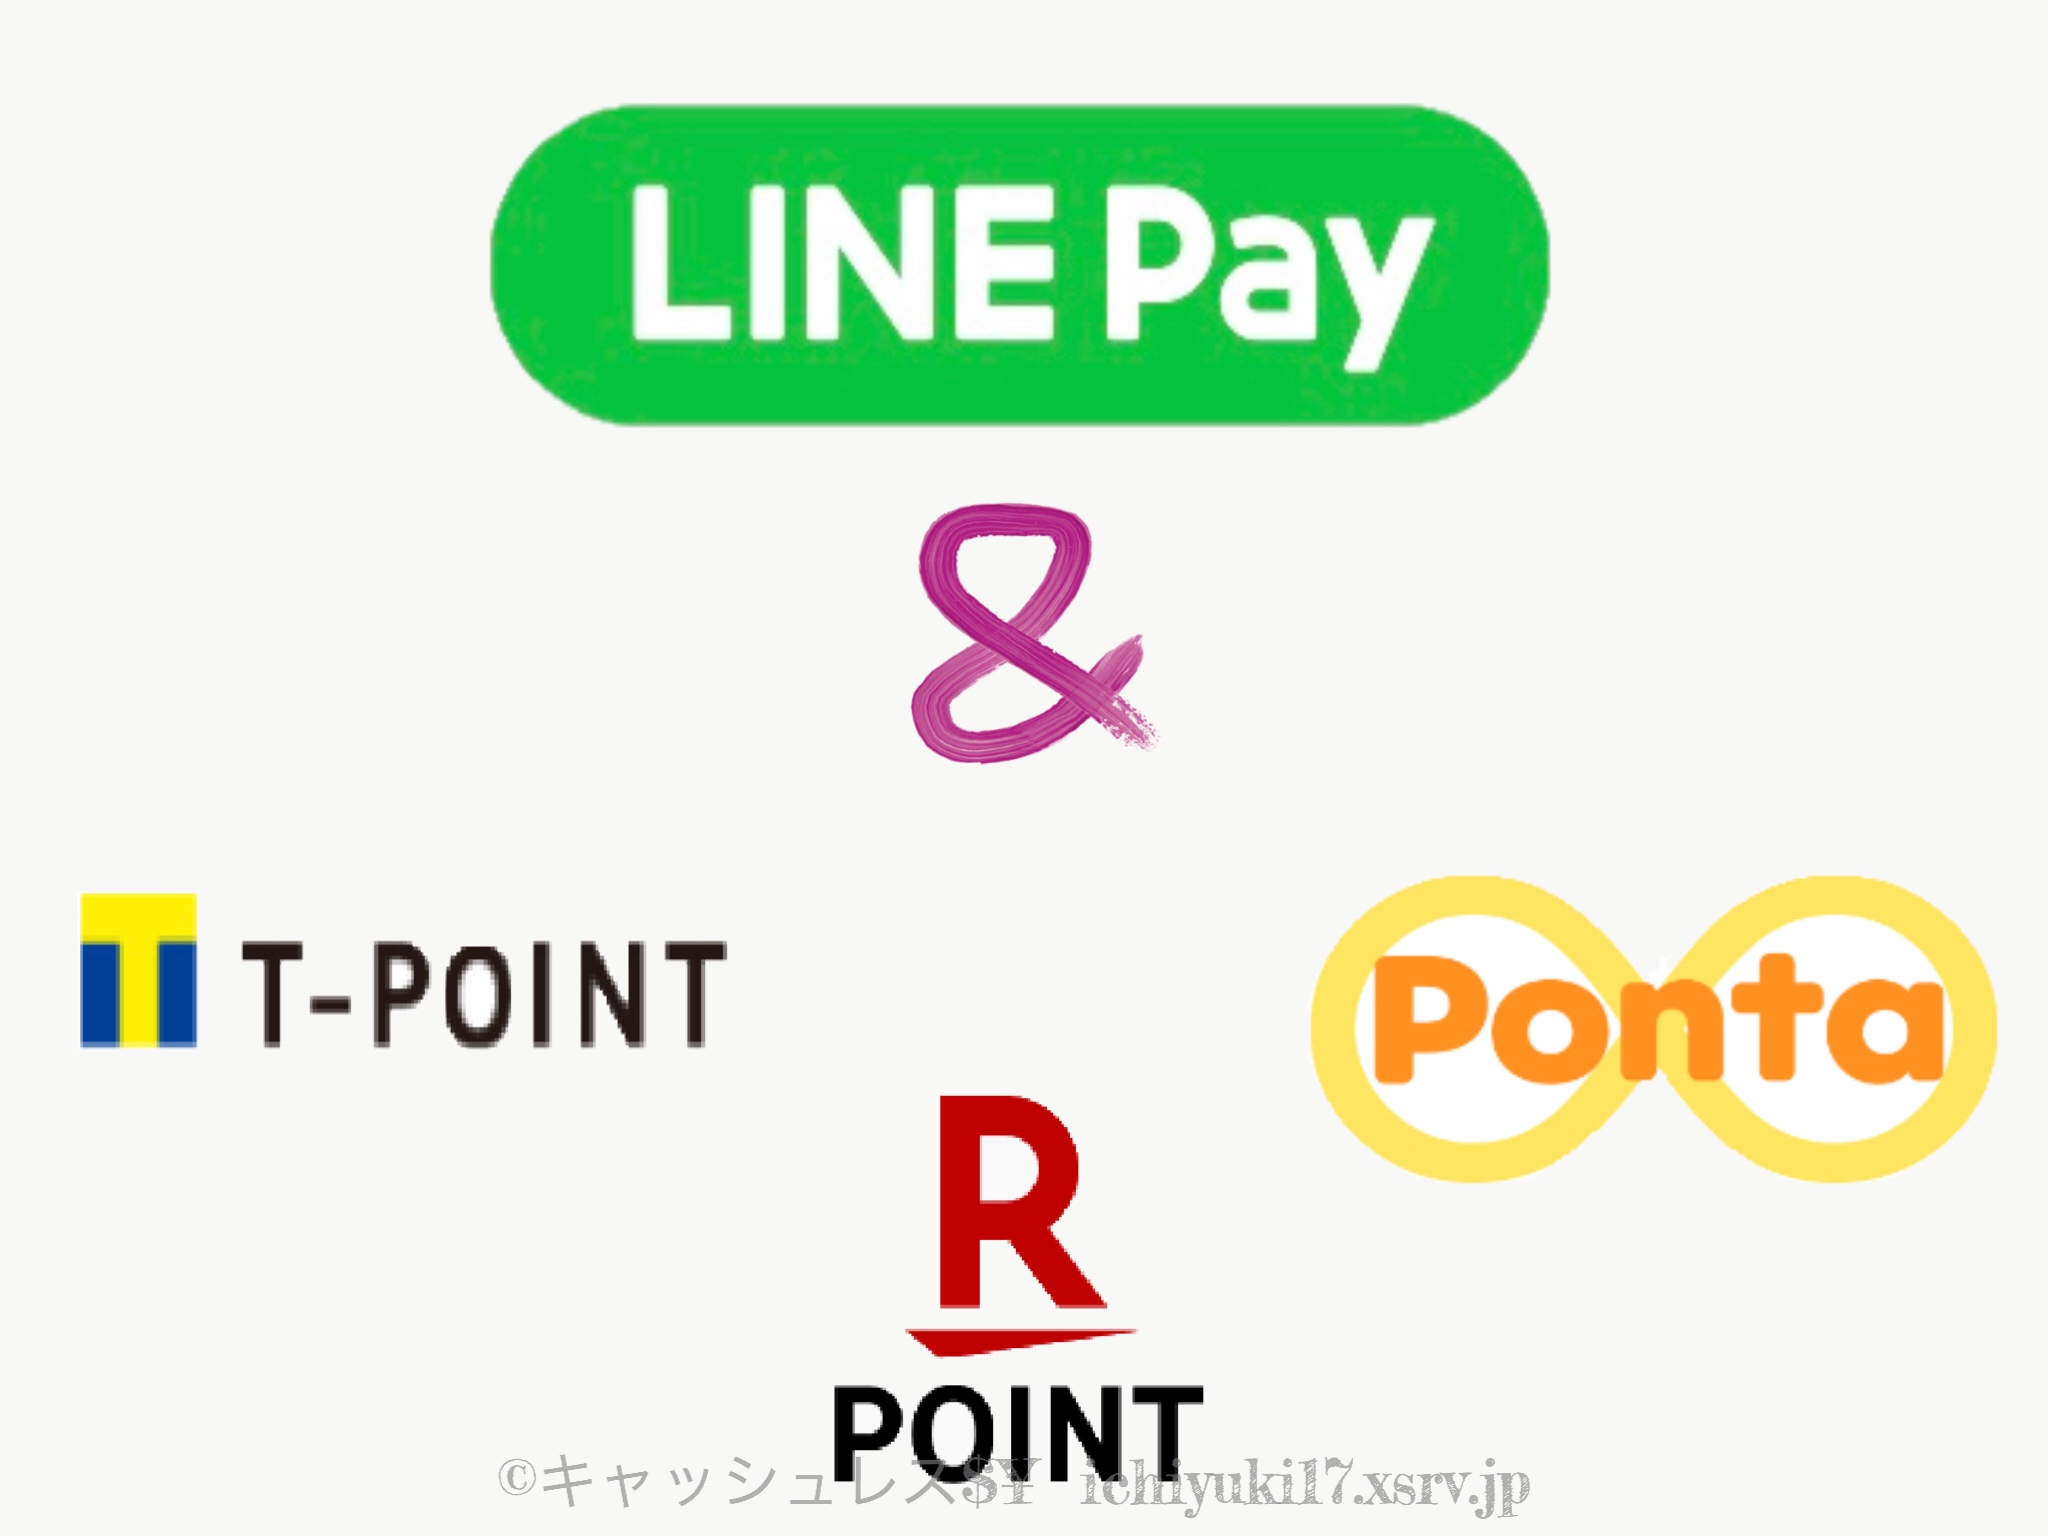 【LINE Pay】LINE Payと一緒に使ってポイント2重取り